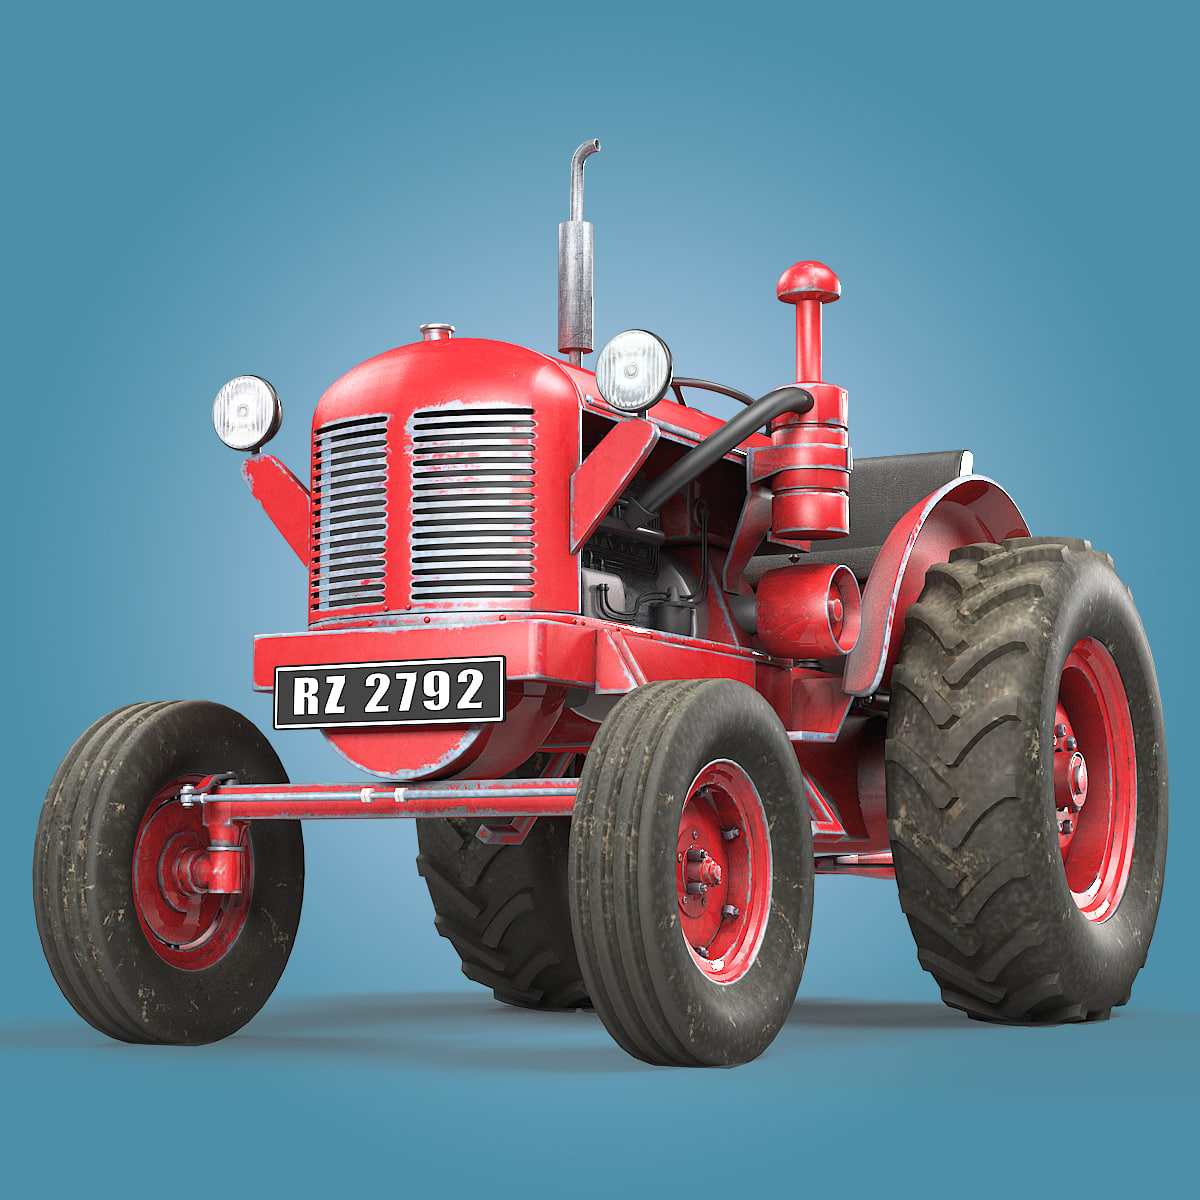 Tractor 3. David Brown трактор. Tracktor David Brown 1949г. Трактор 3d Max. Трактор модель d 124.050.